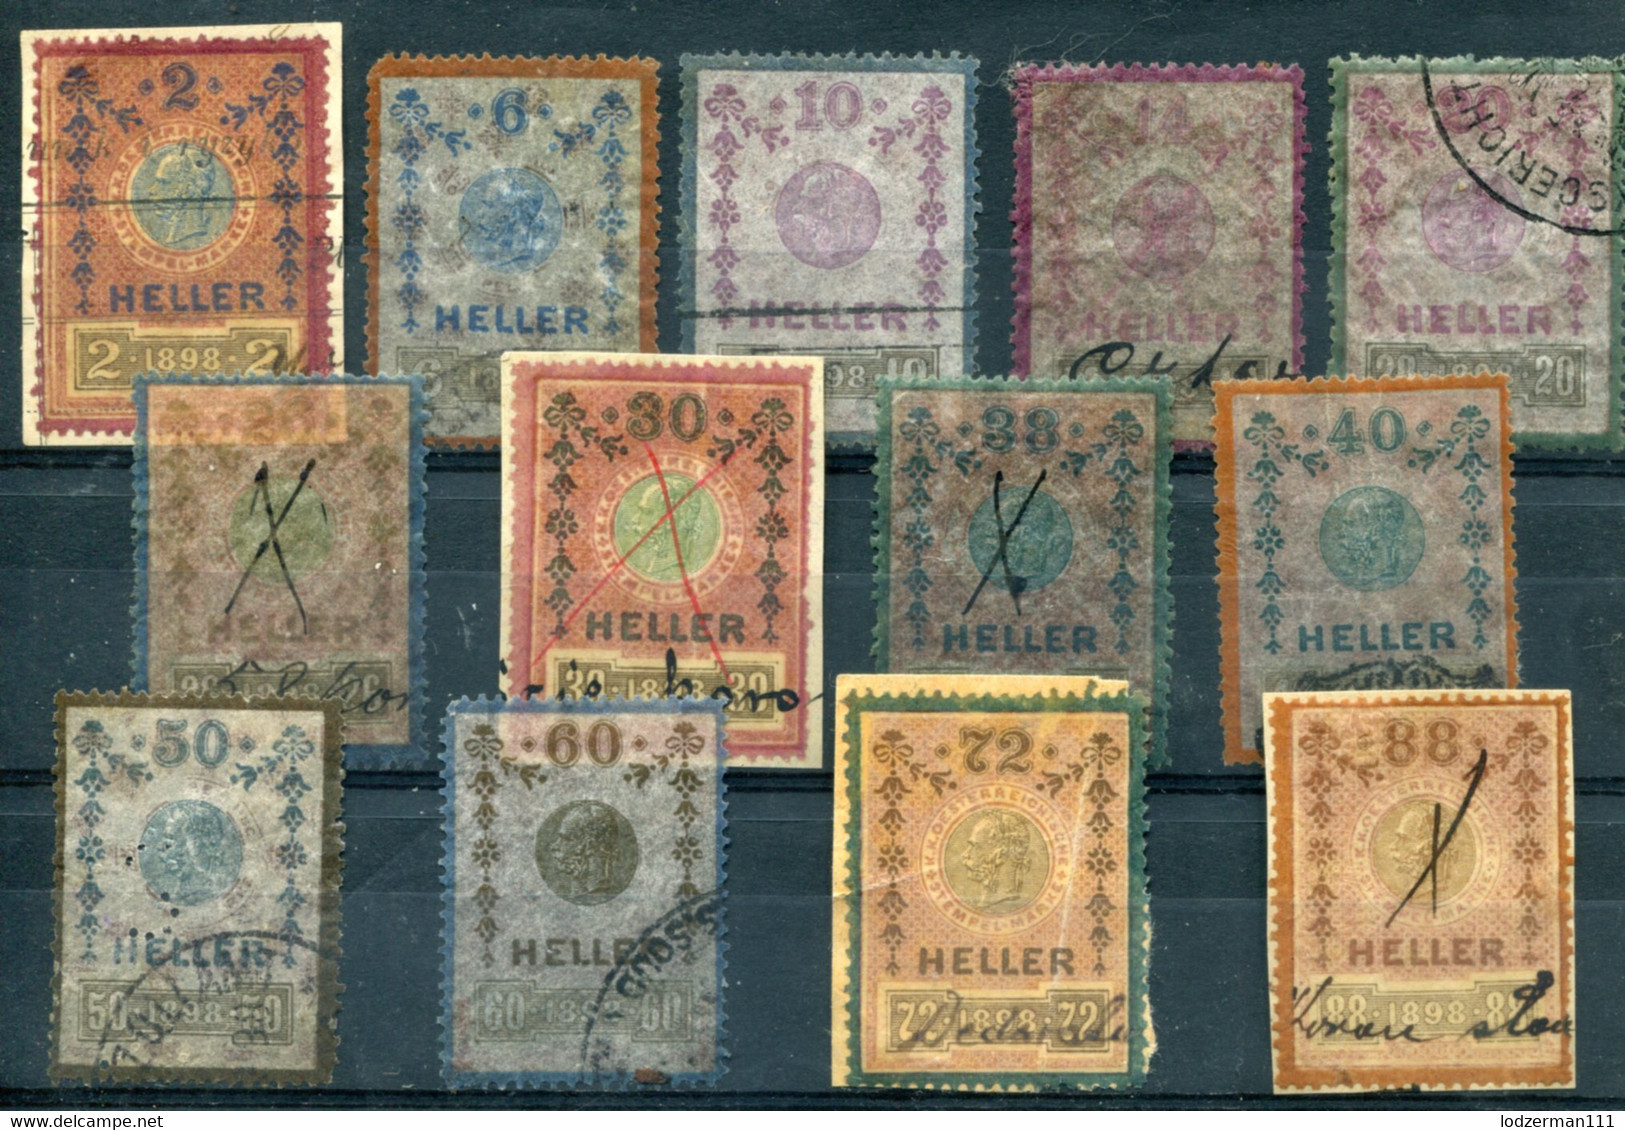 AUSTRIA 1898 - 13 Revenue Stamps 2-88 H - Revenue Stamps